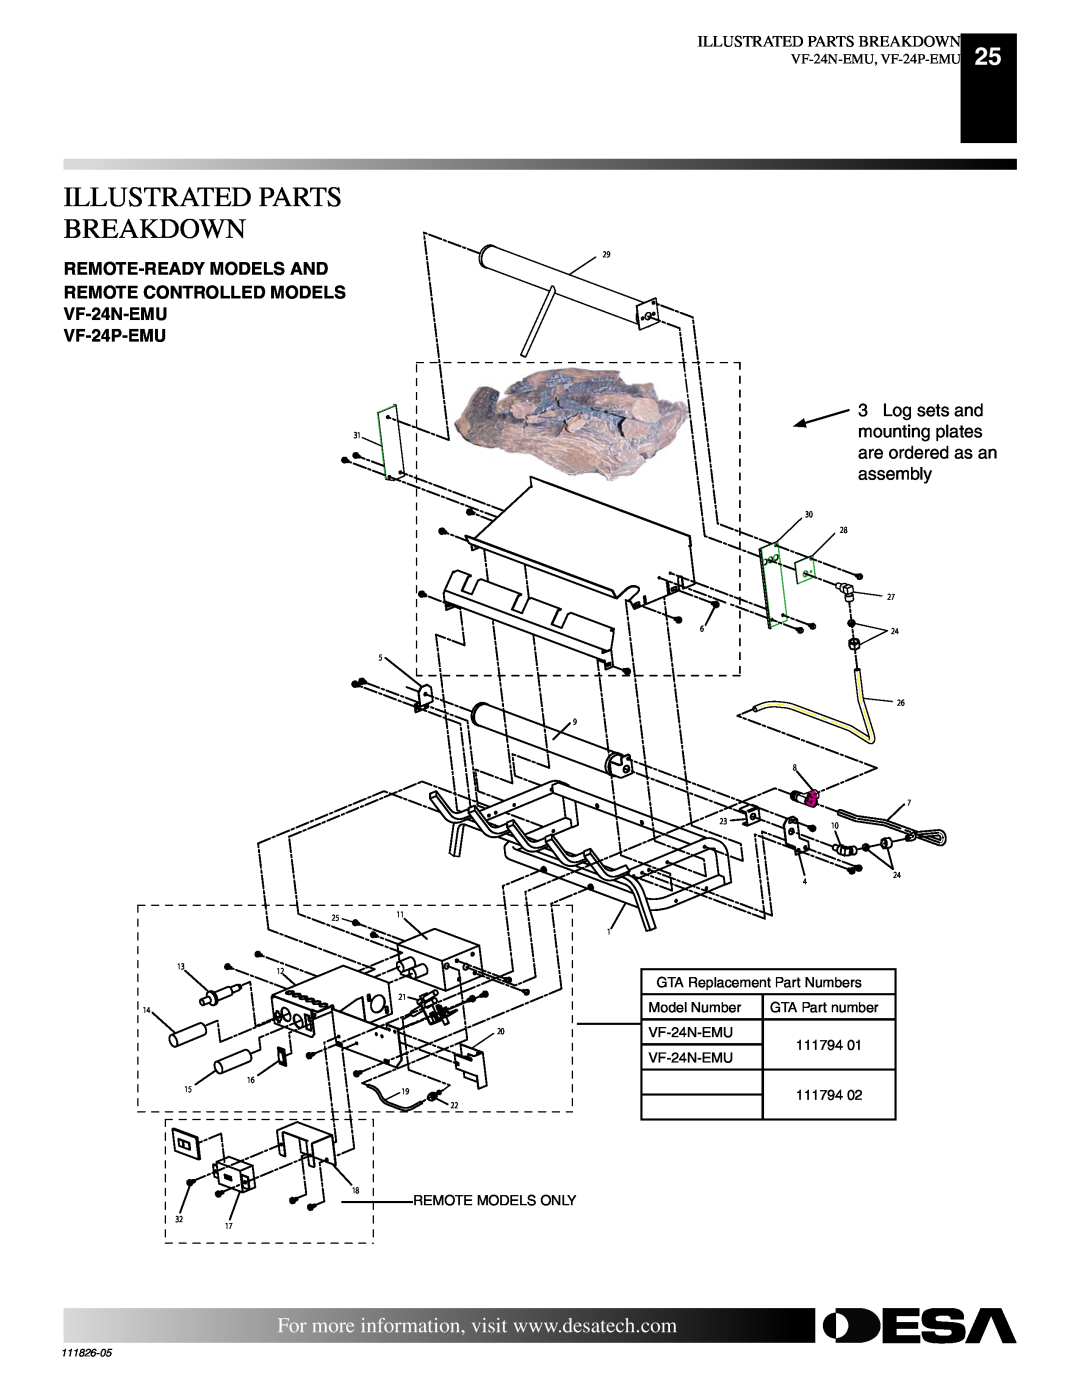 Desa VF-18N-EMU, VF-18P-EMU installation manual Illustrated Parts Breakdown, VF-24N-EMU, VF-24P-EMU, 111826-05 